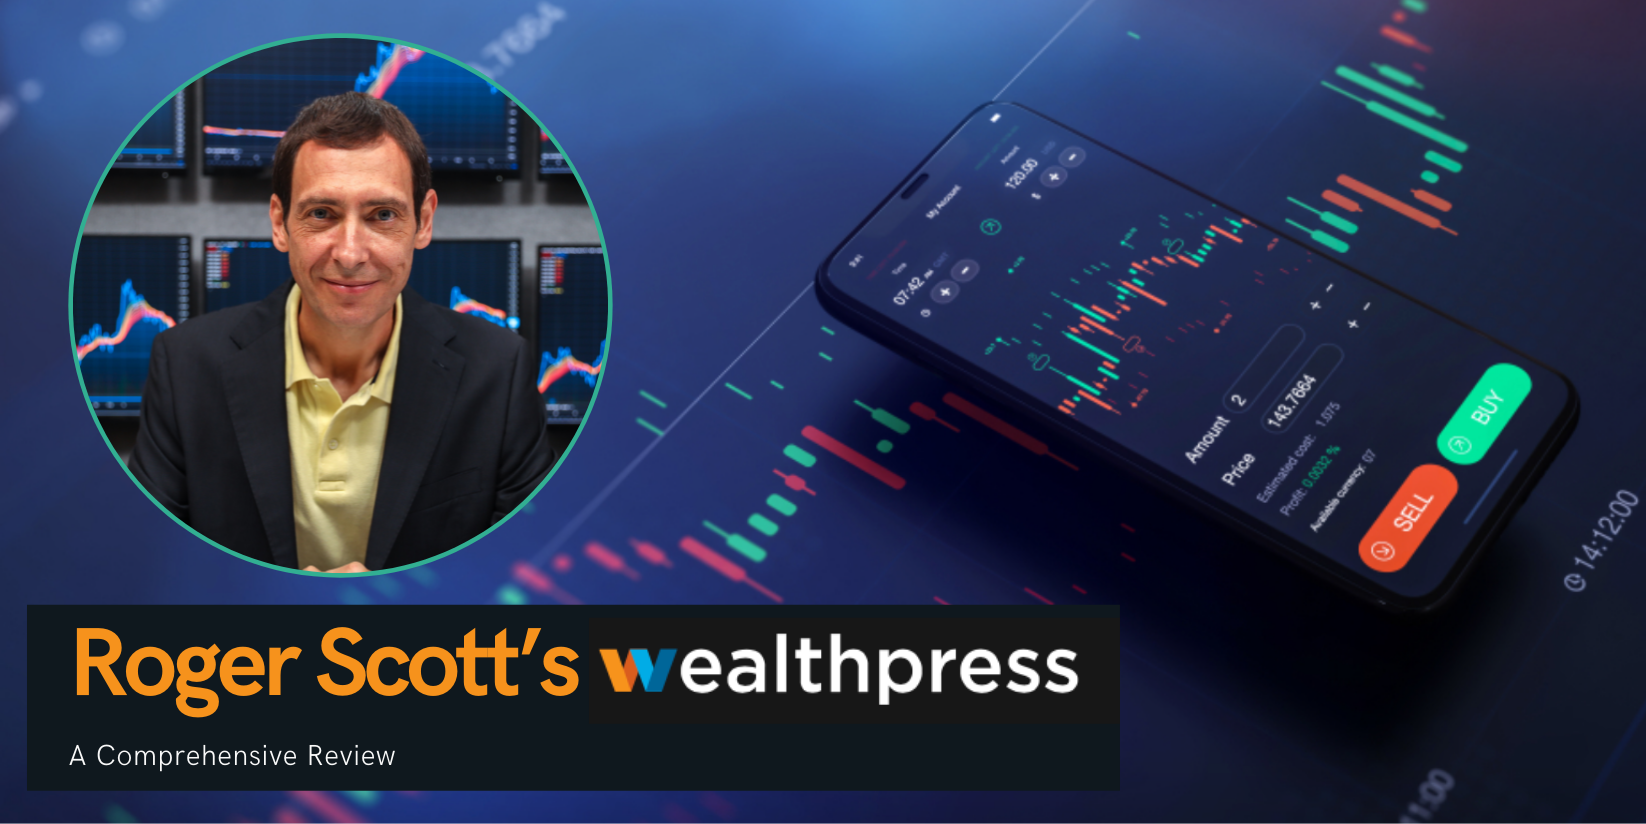 Comprehensive Review of Roger Scott's WealthPress